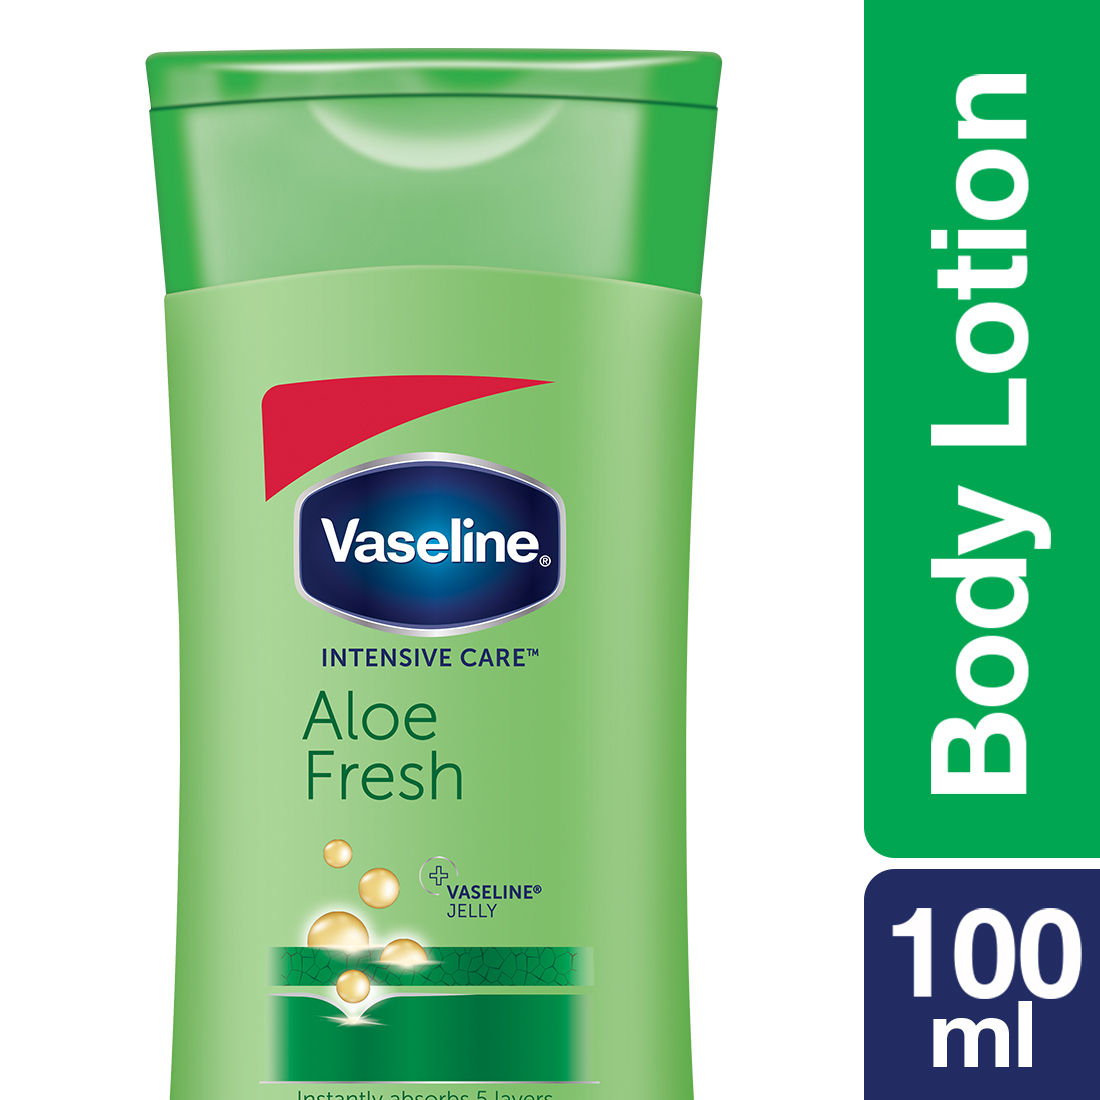 Buy Vaseline Intensive Care Aloe Fresh Body Lotion, 100 ml Online